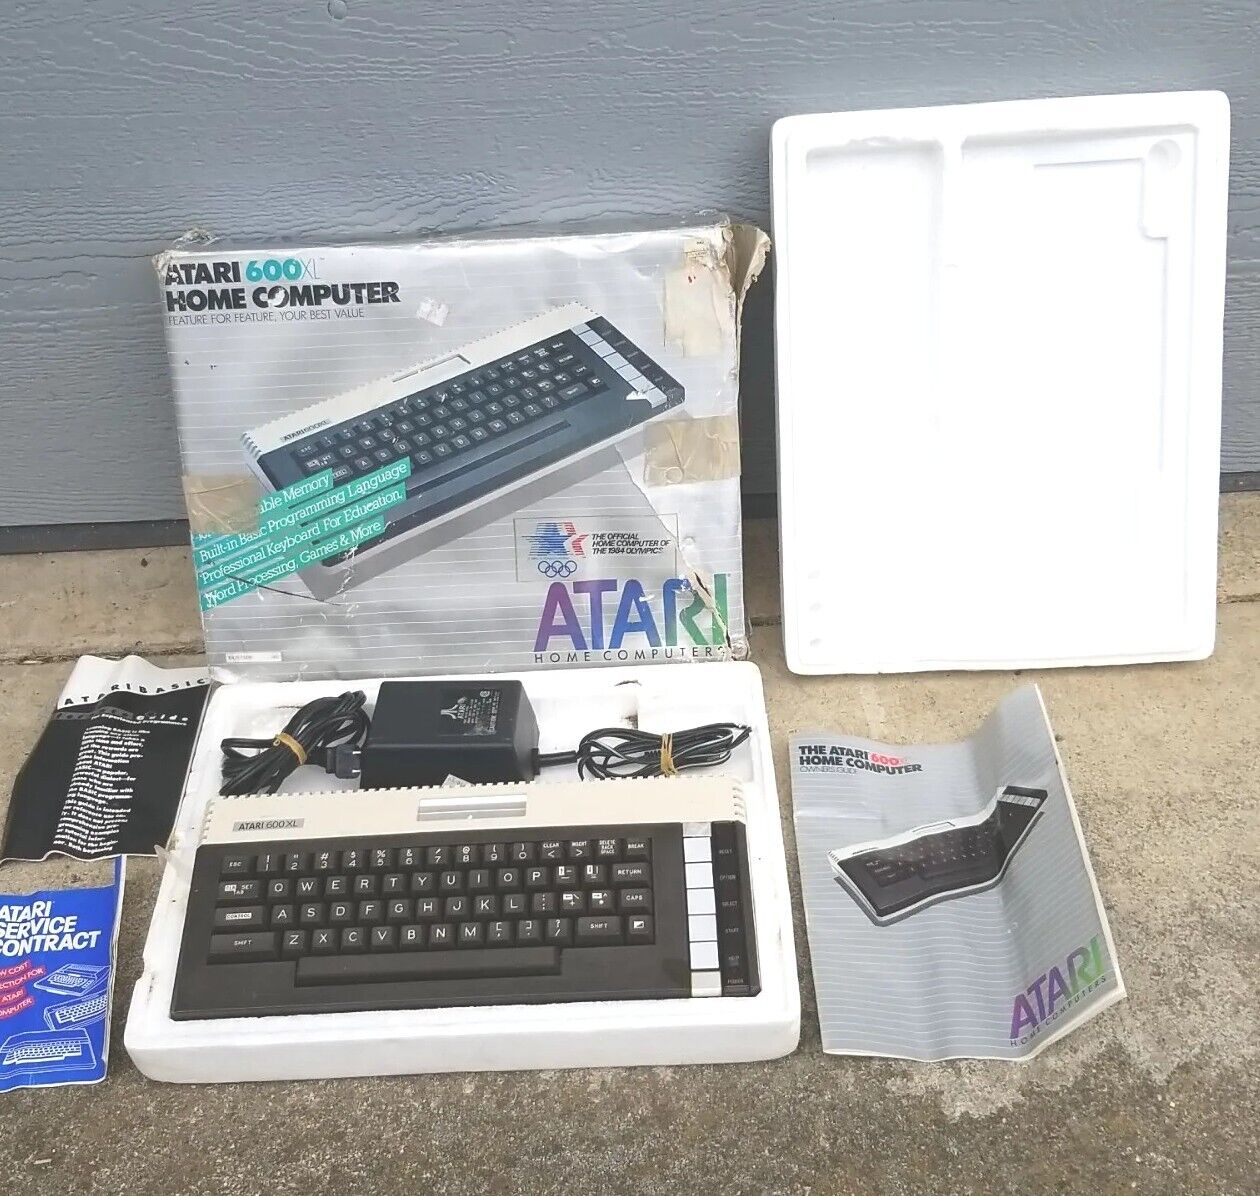 Vintage Atari 600XL 8-bit Home Computer - 1983 with Box & Original Packaging 